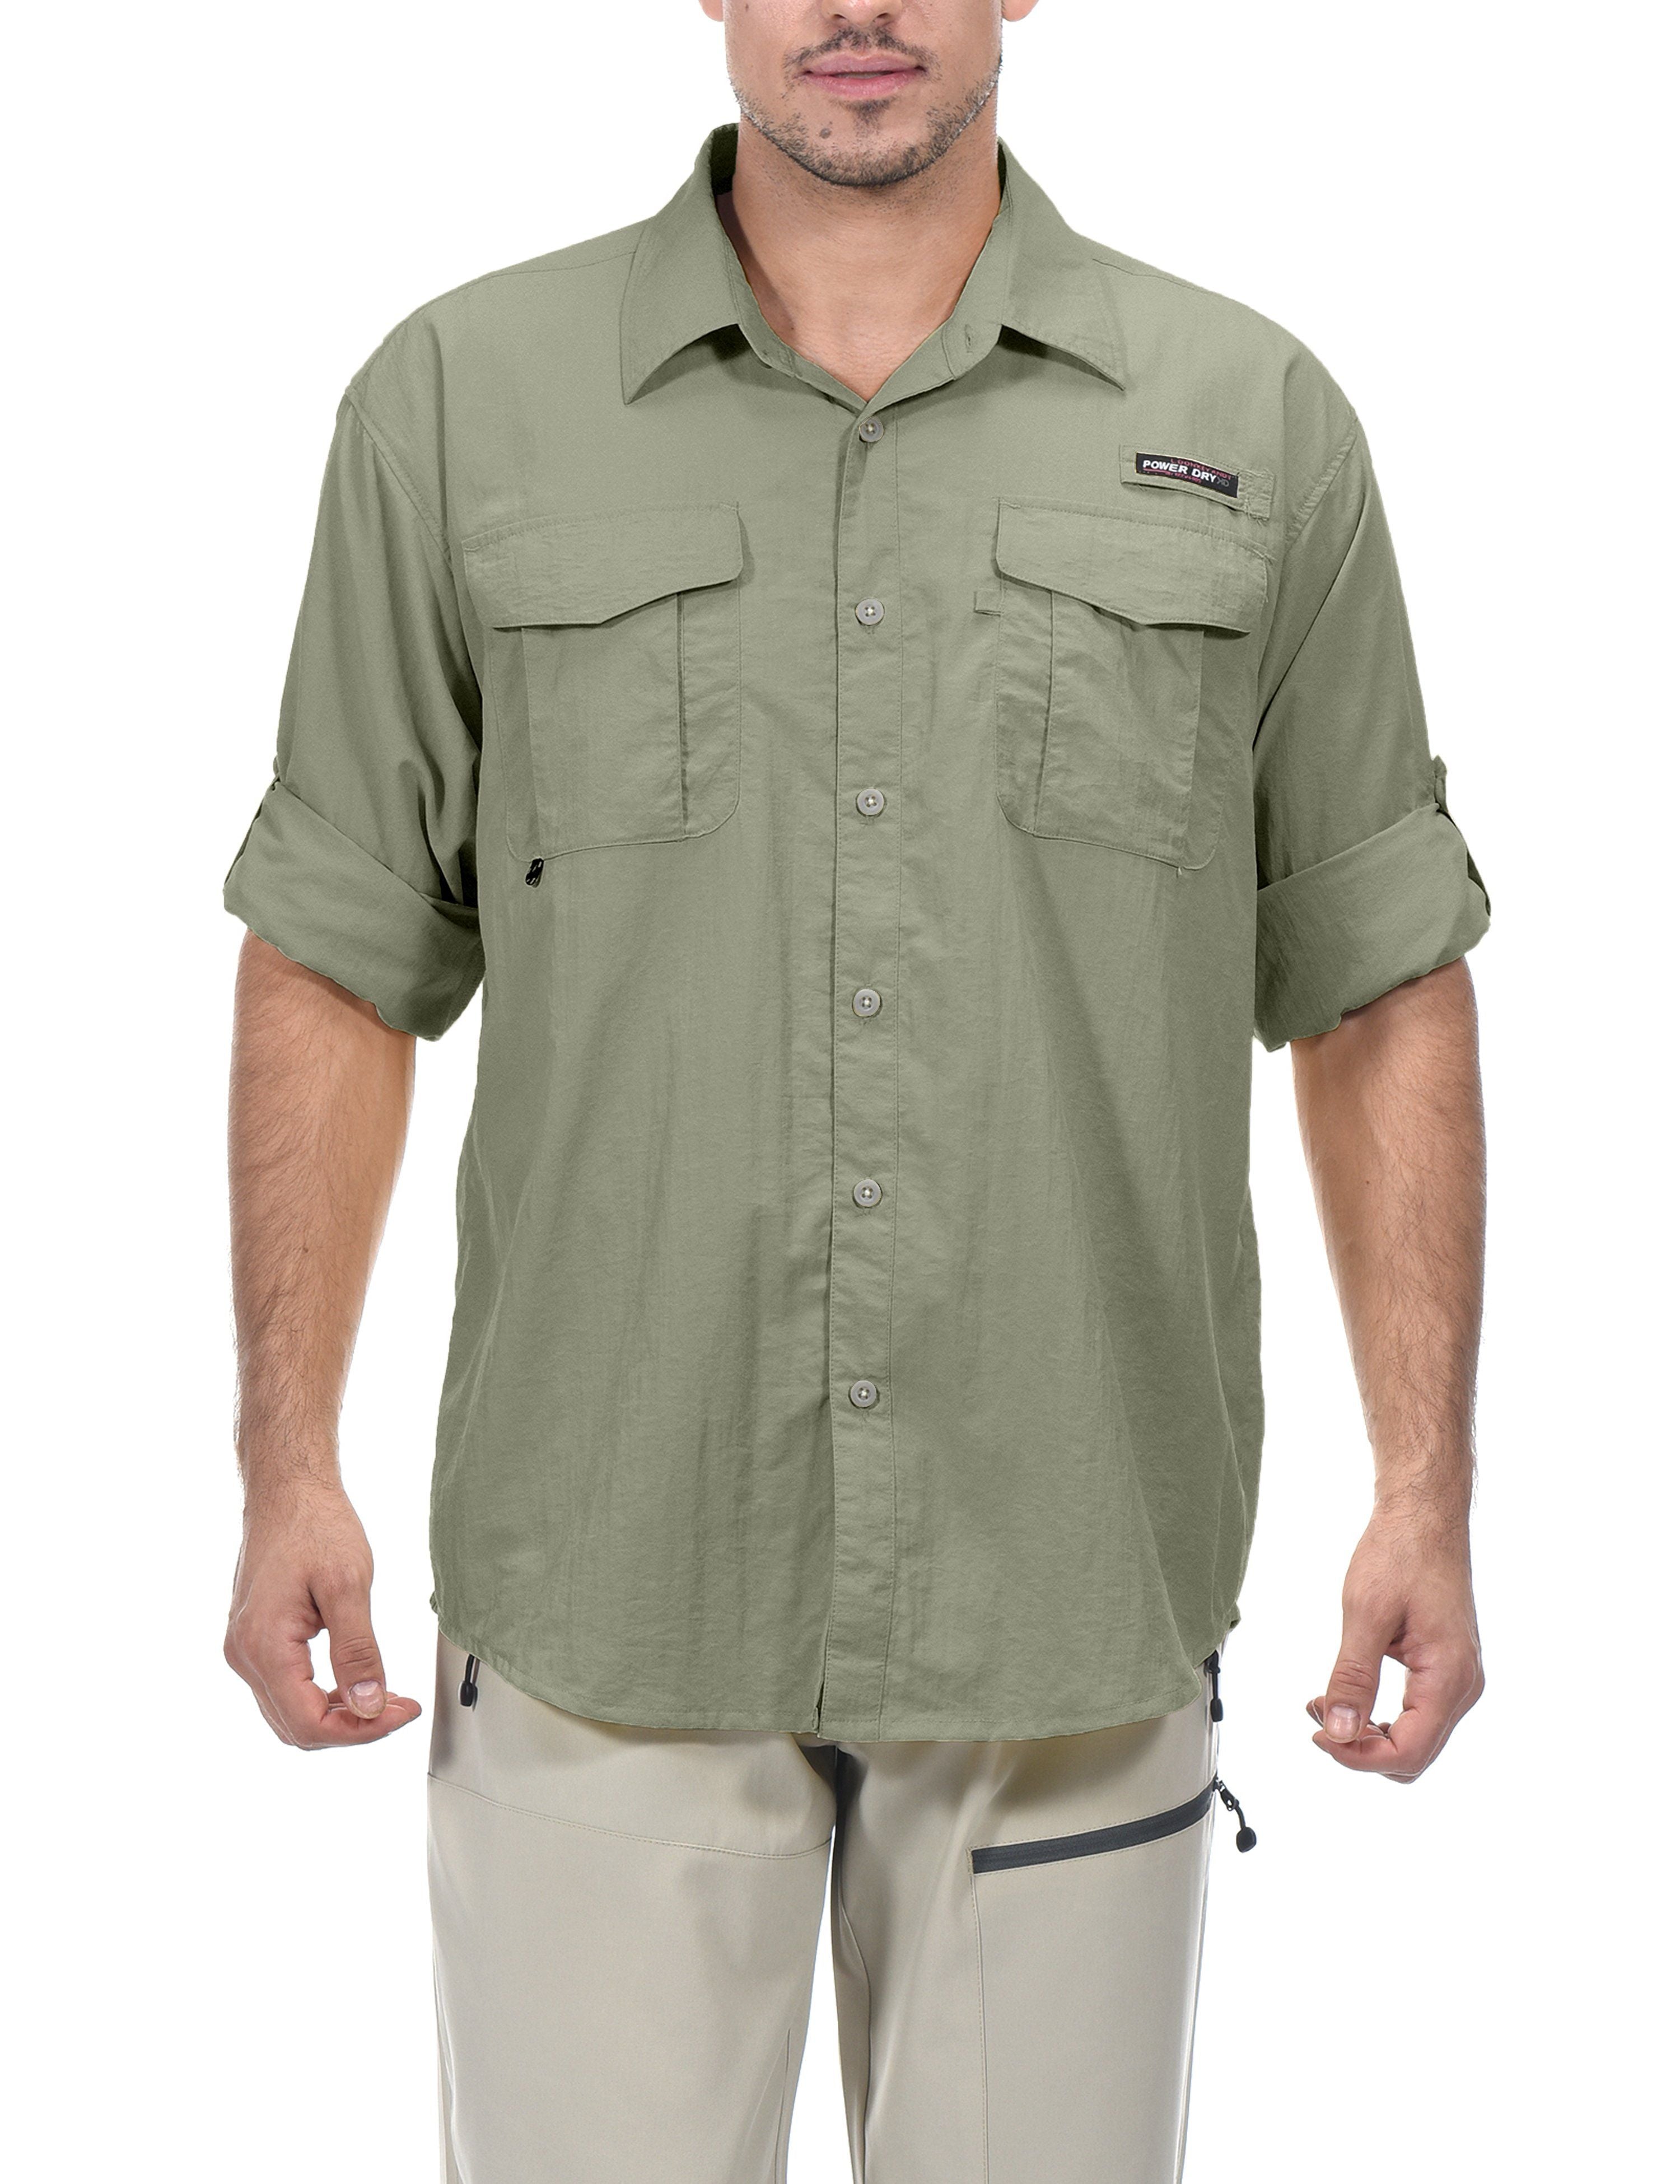 Men's UPF 50+ UV Protection Shirt, Long Sleeve Fishing Shirt